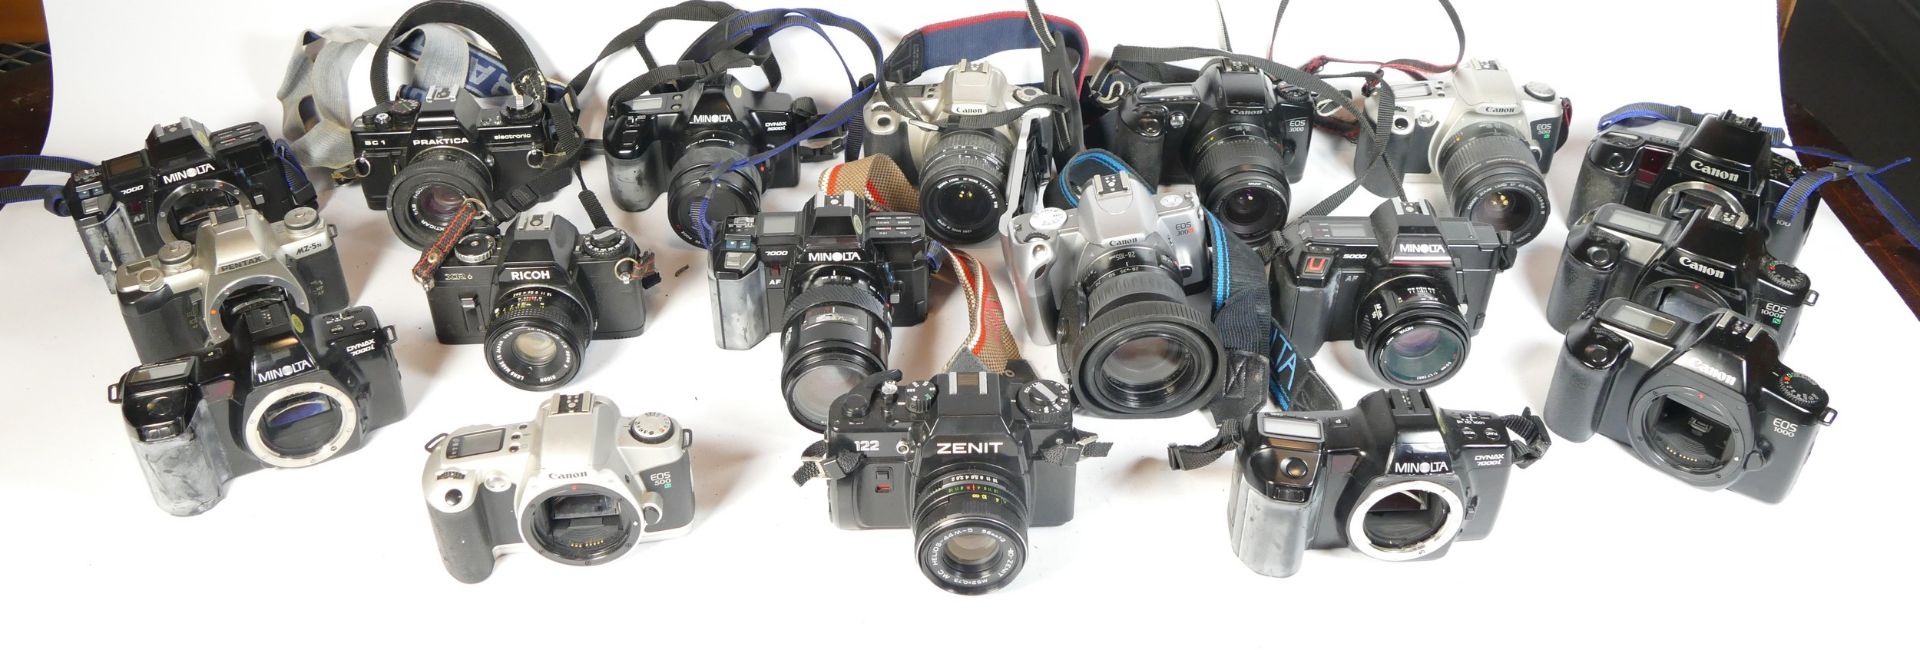 Twenty four SLR vintage film cameras to include a Canon EOS 500N, a canon EOS 3000, a Minolta